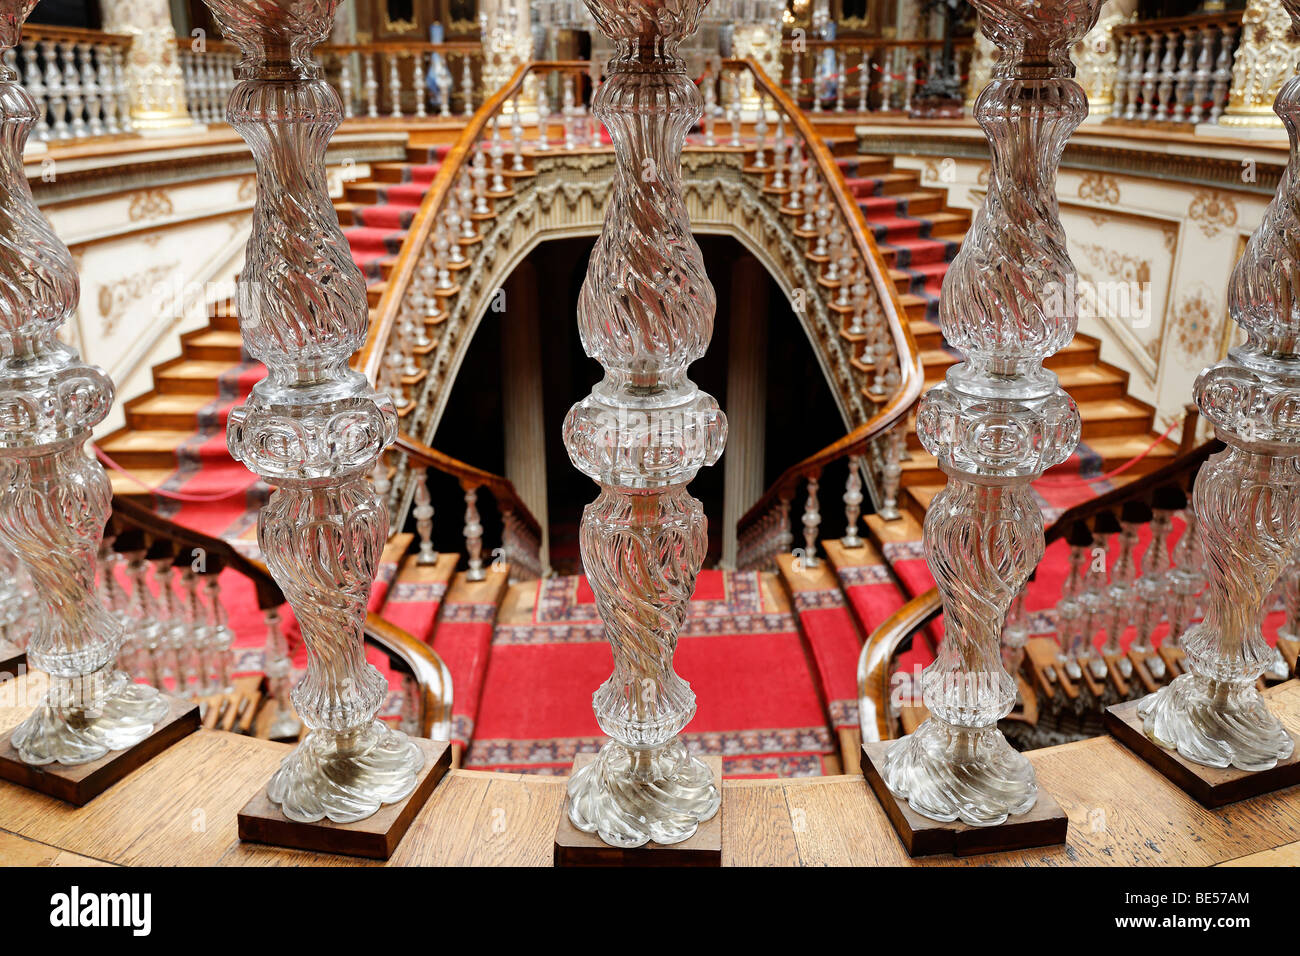 Kristall-Treppe, Glastreppe, Dolmabahce Palast des Sultans-Palast aus dem 19. Jh, Besiktas, Istanbul, Türkei Stockfoto